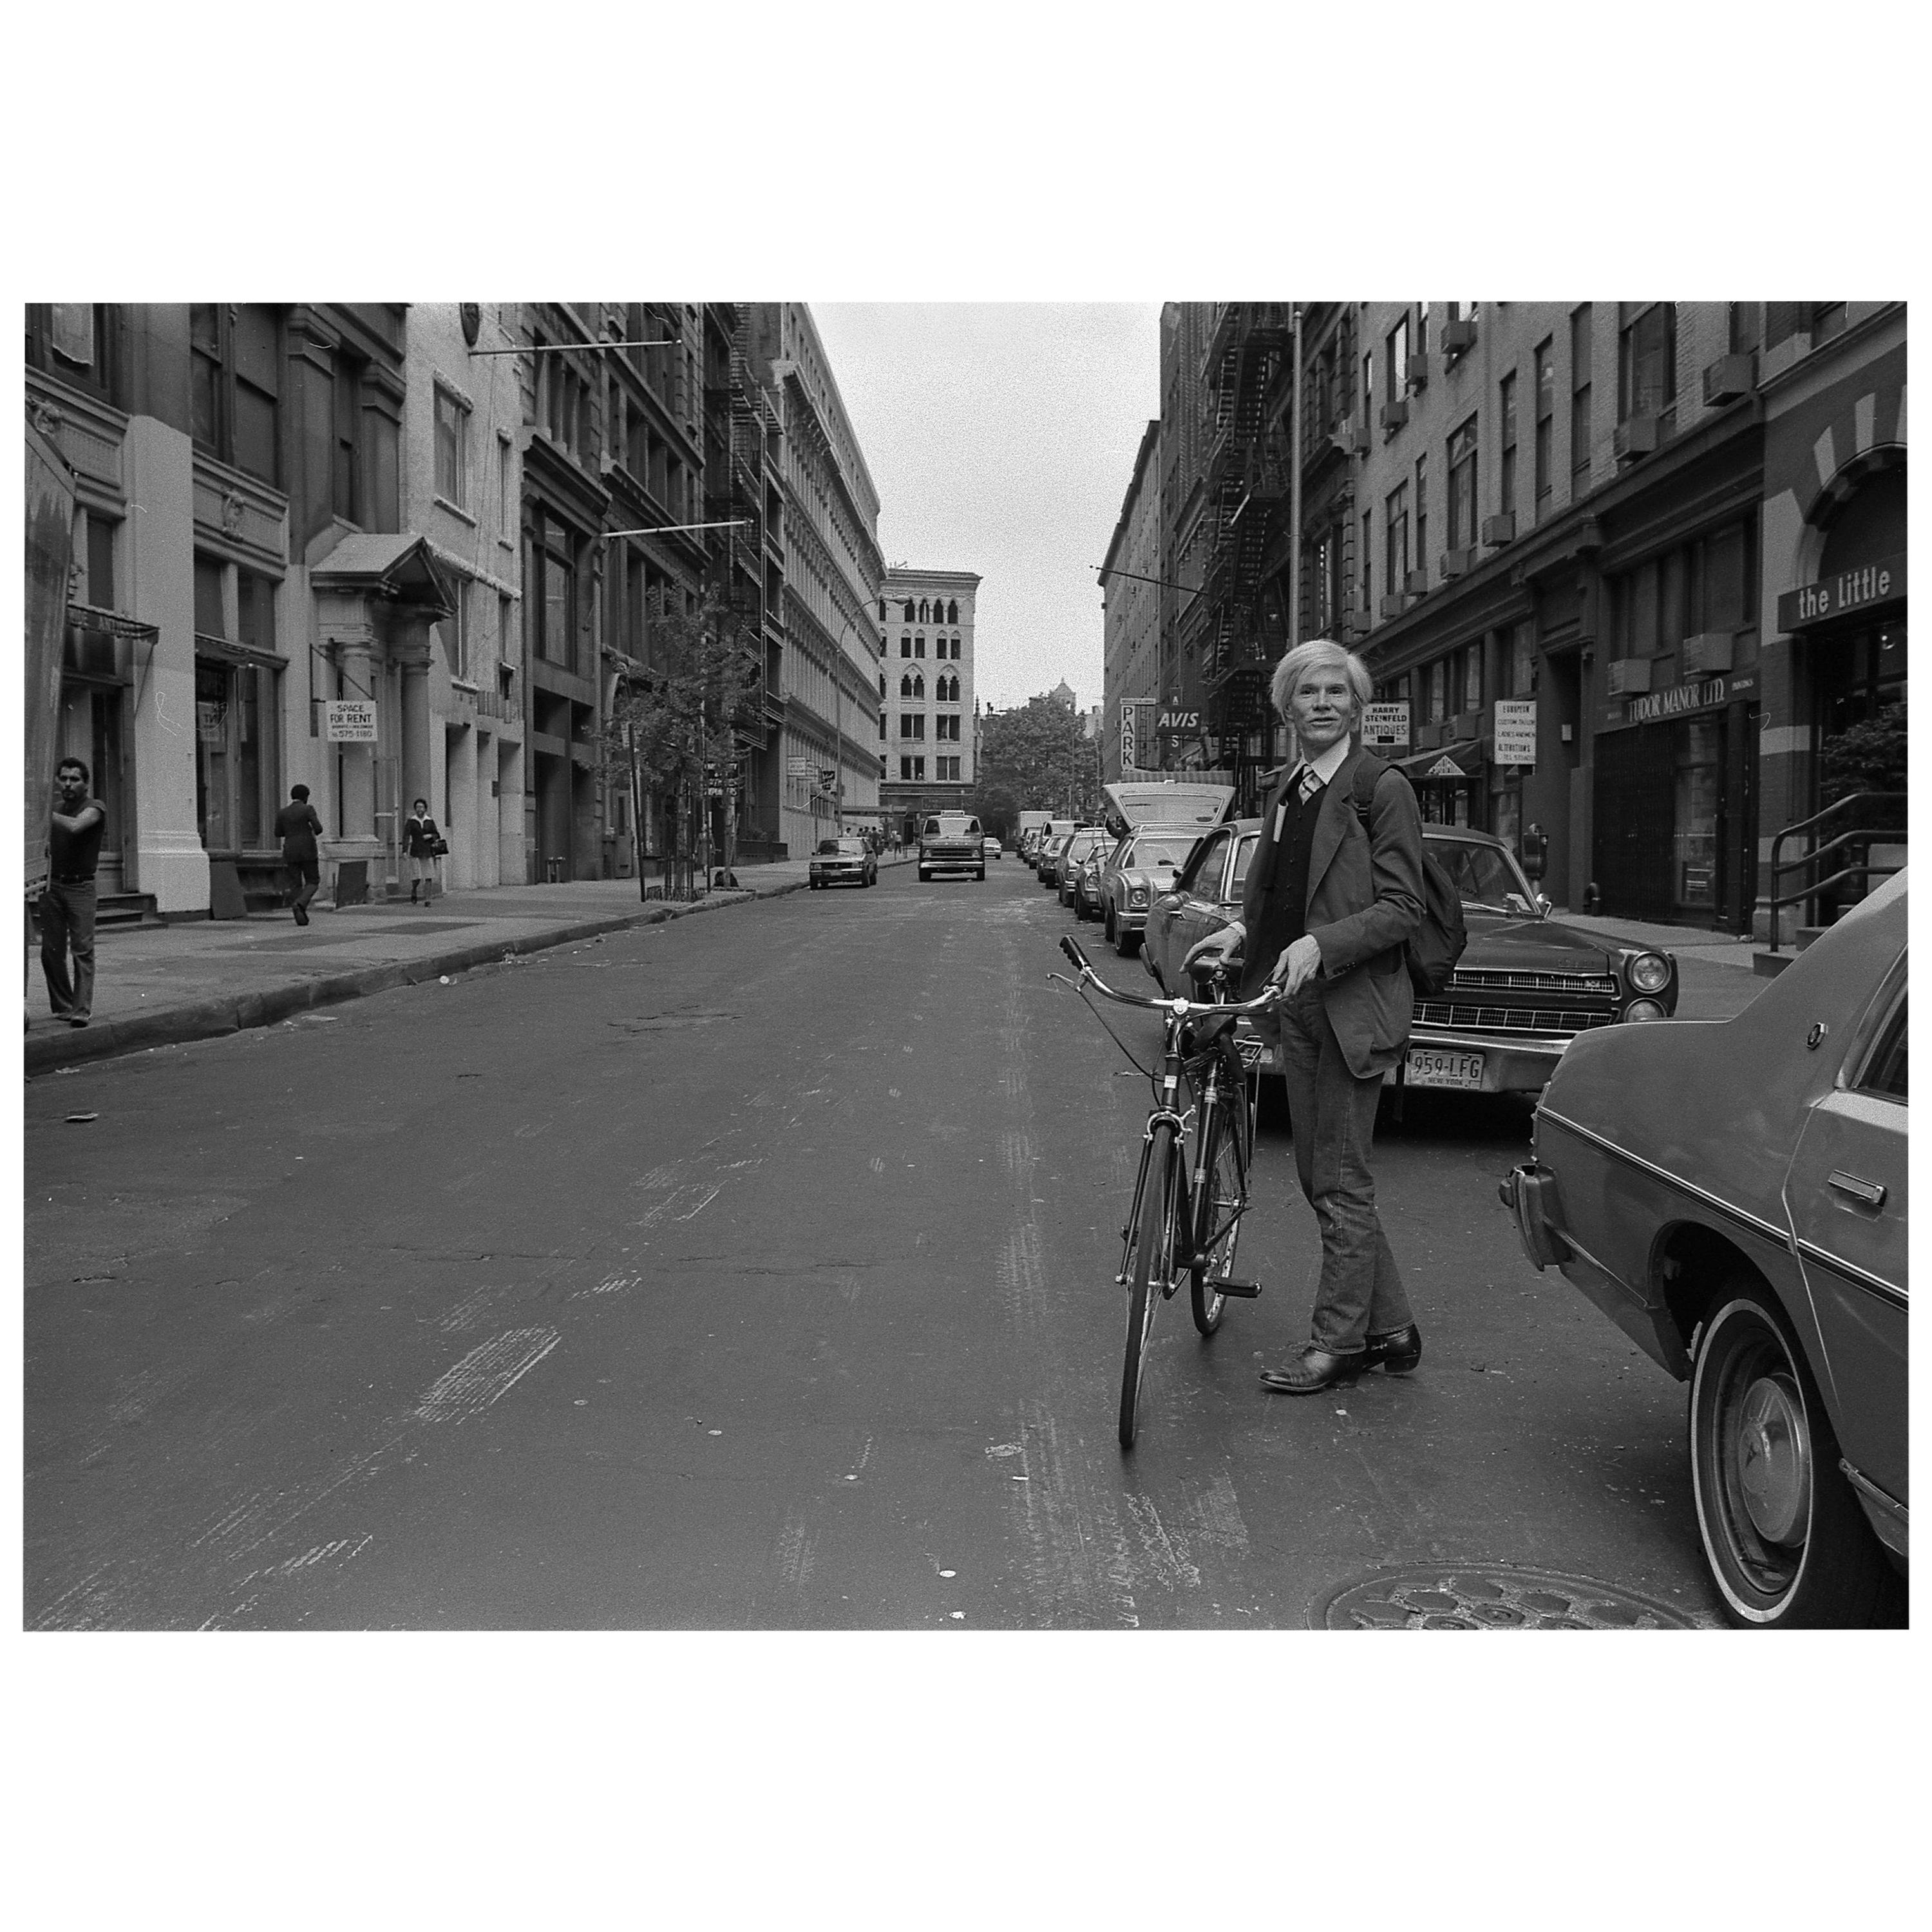 Robert Levin, "Andy Warhol With Bike on 11th Street, NYC 1981" Print, USA, 2015